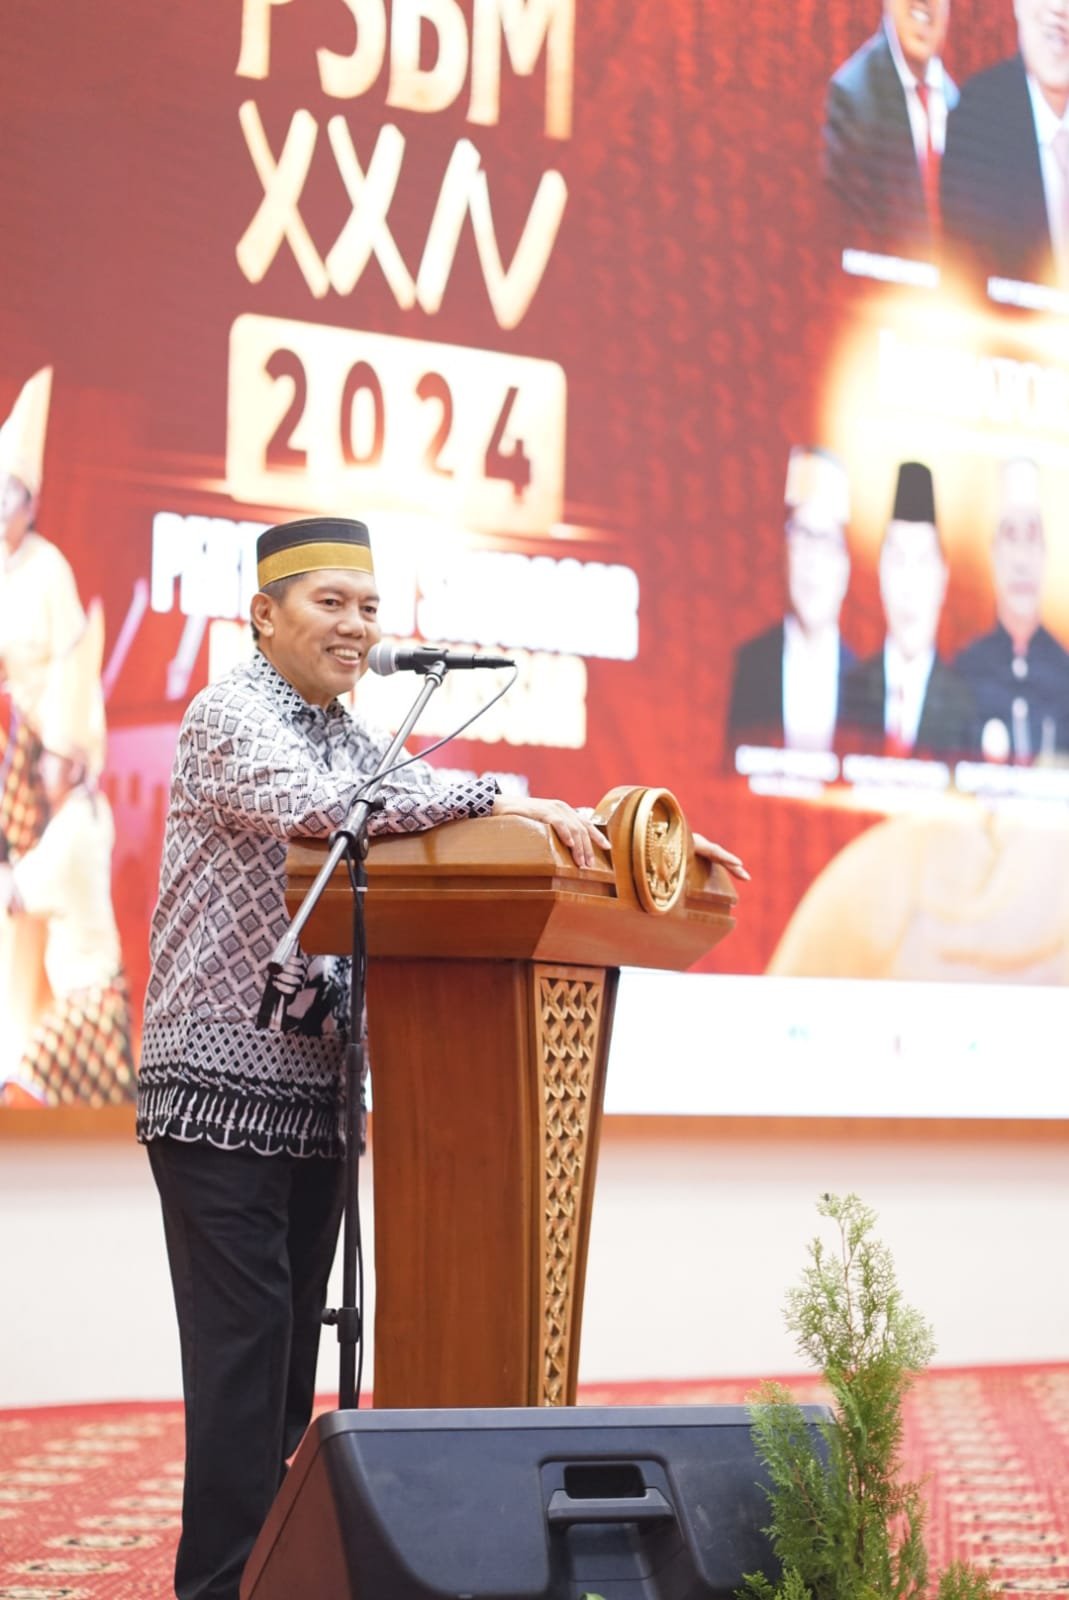 PSBM Ke 24: Membangun Solidaritas dan Kolaborasi Antar Pilar dan Saudagar Bugis Makassar